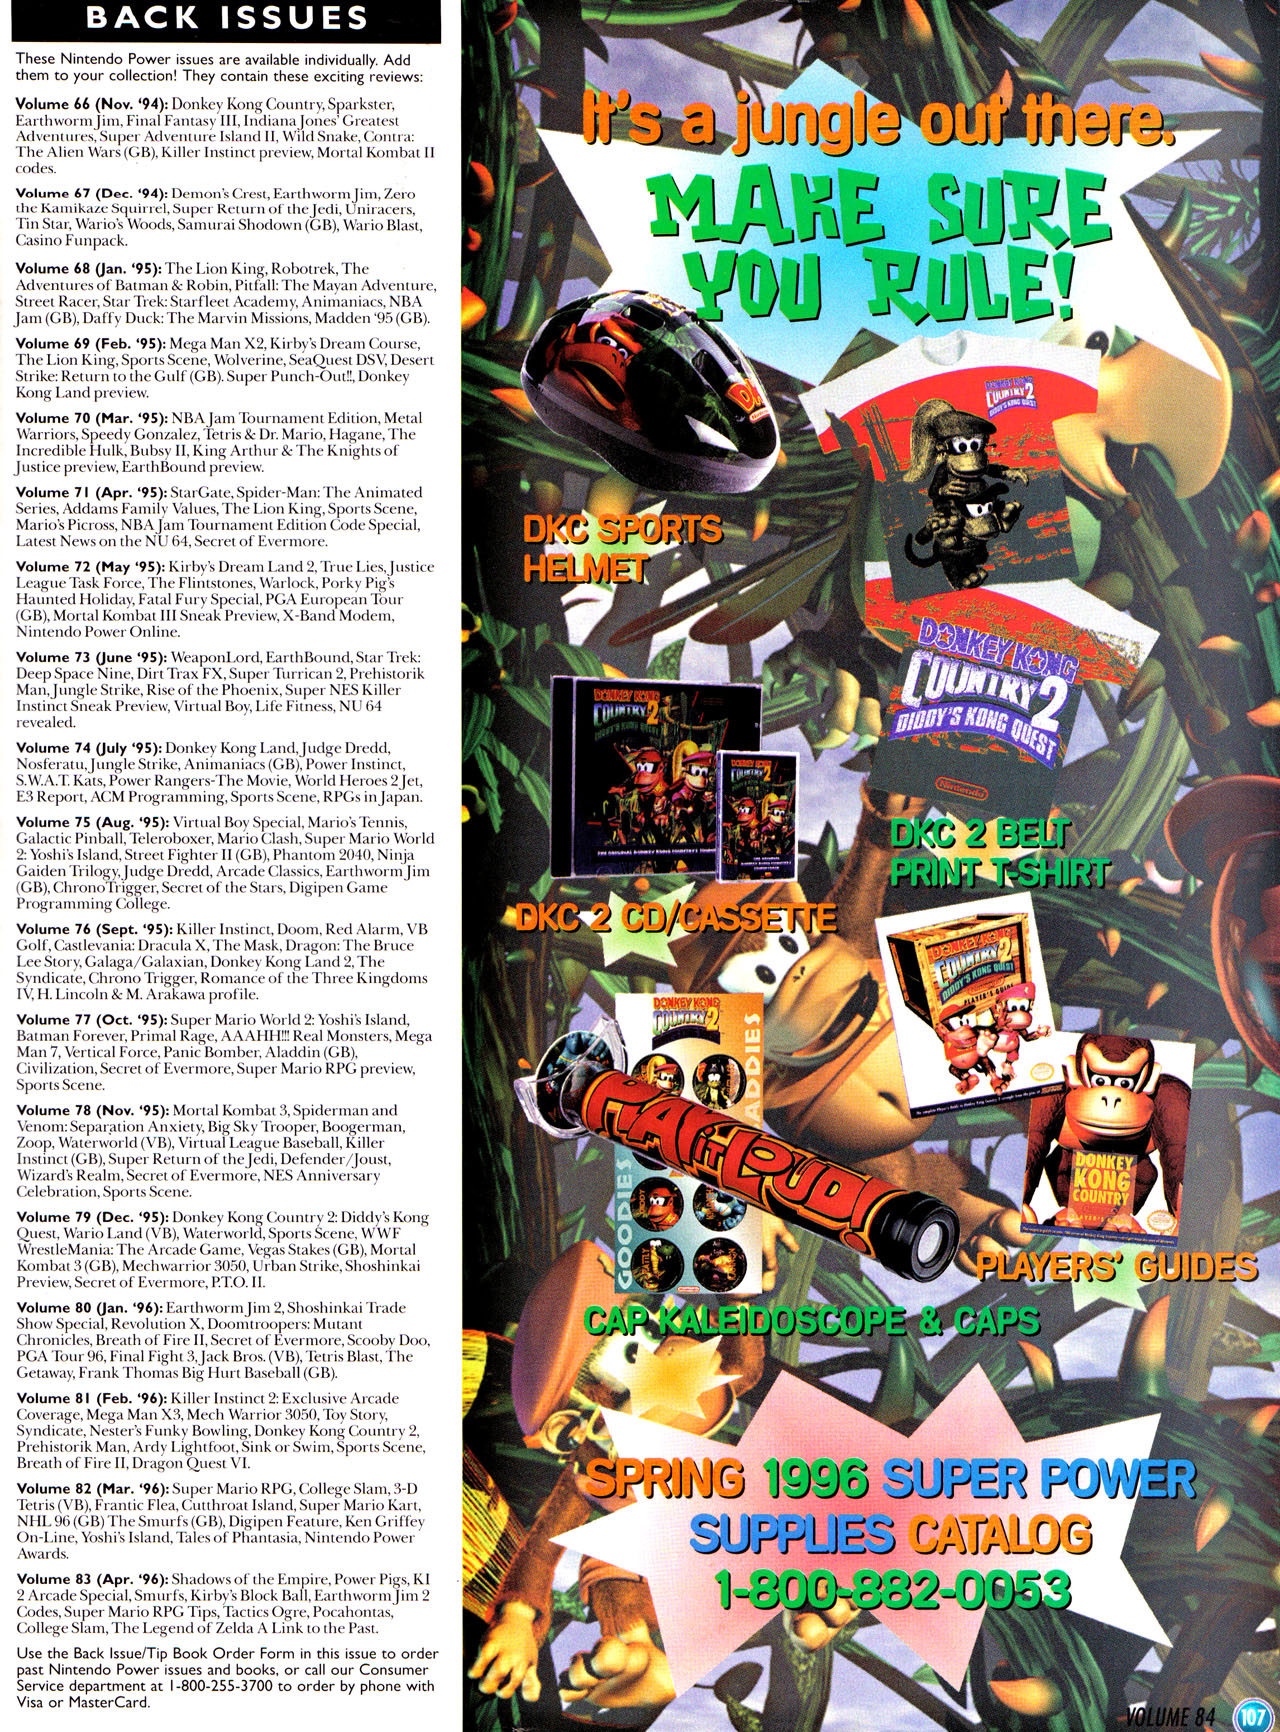 Read online Nintendo Power comic -  Issue #84 - 116